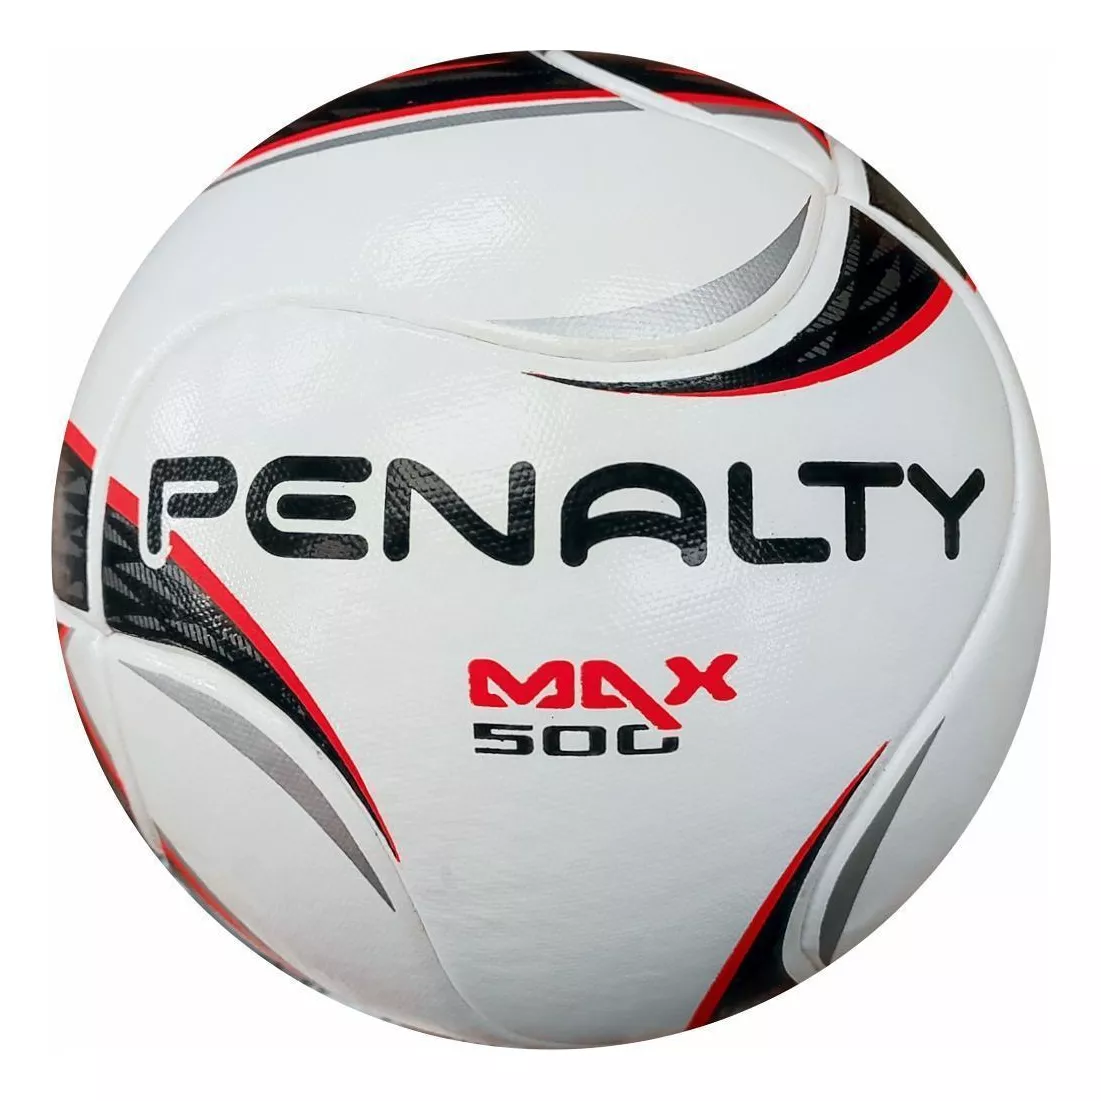 Terceira imagem para pesquisa de bola futsal penalty max 300